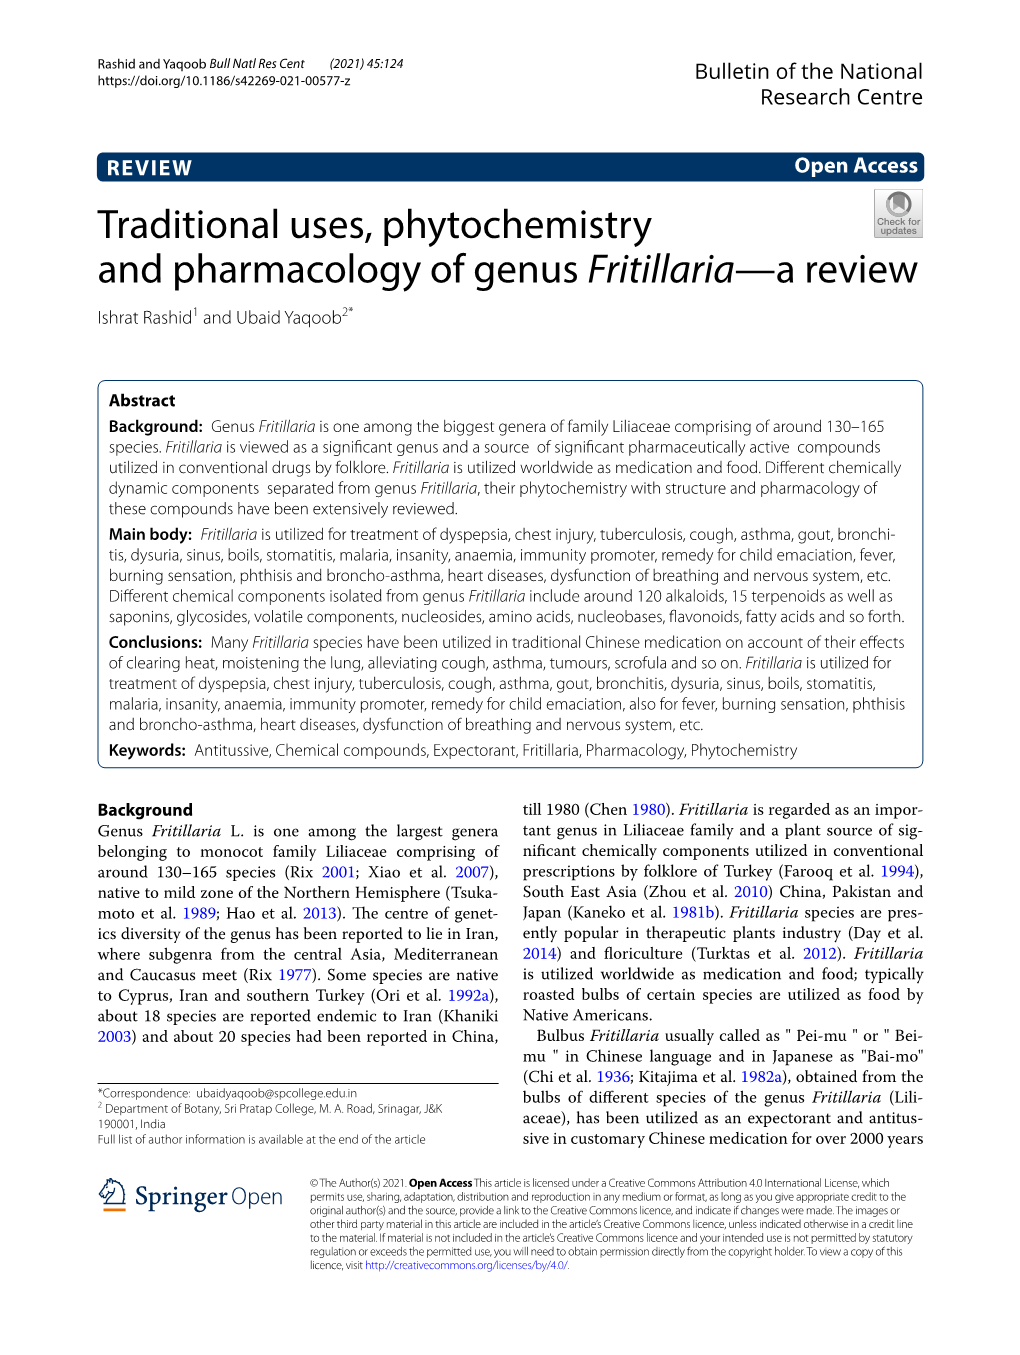 Traditional Uses, Phytochemistry and Pharmacology of Genus Fritillaria—A Review Ishrat Rashid1 and Ubaid Yaqoob2*